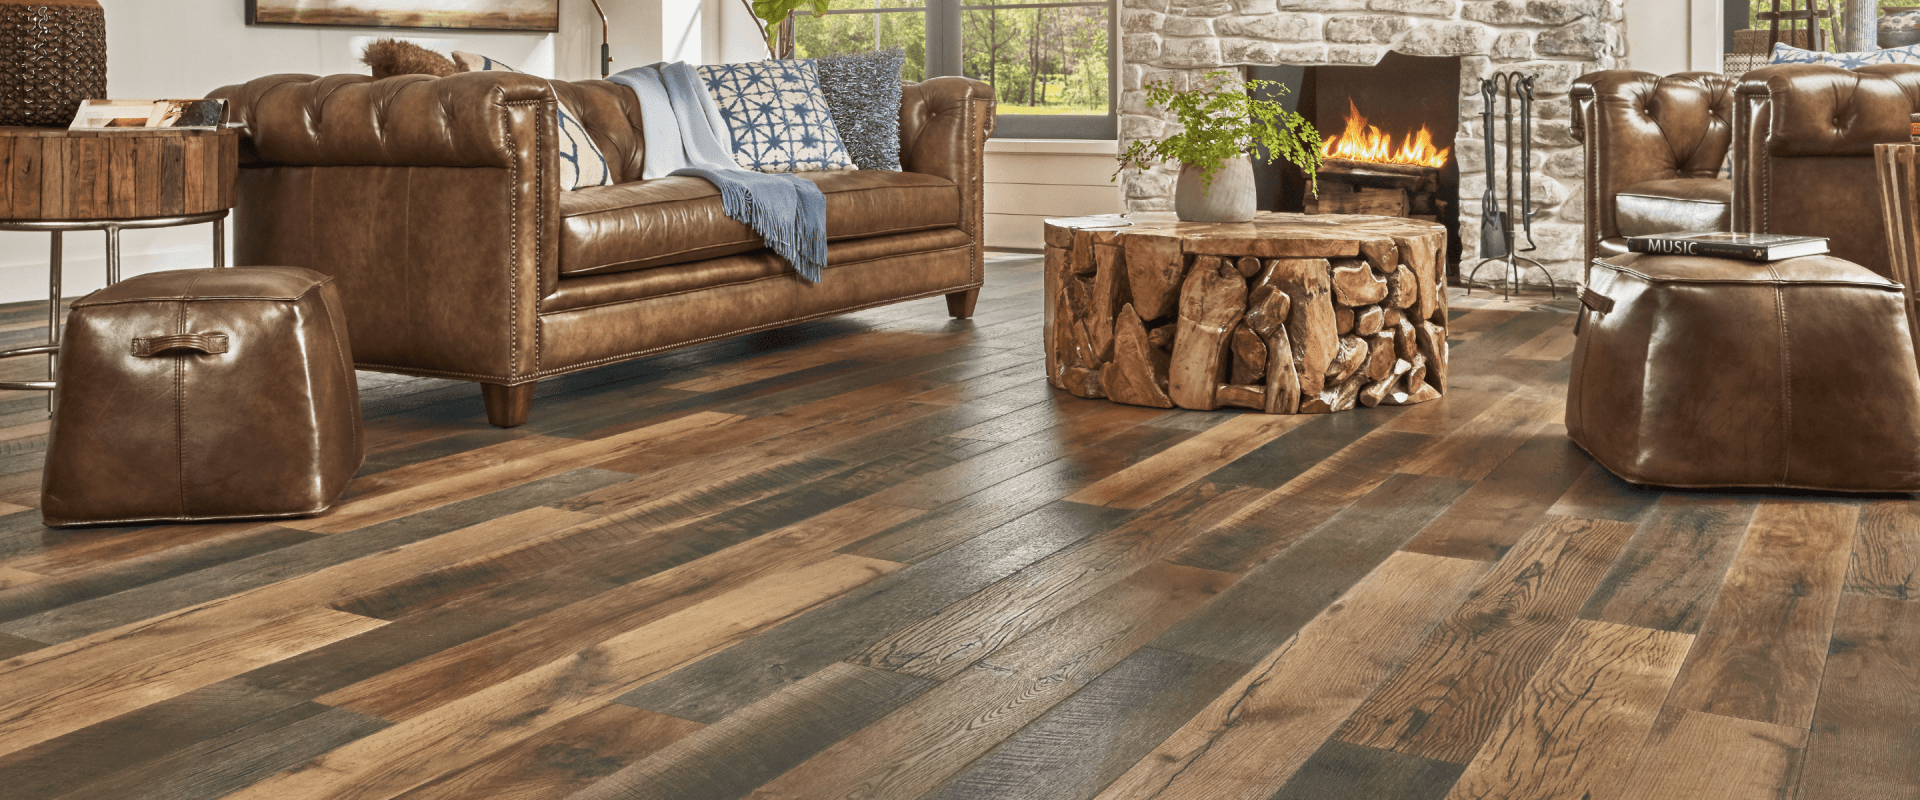 Pergo Timbercraft Wetprotect Antique, Laminate Flooring Reclaimed Wood Effect